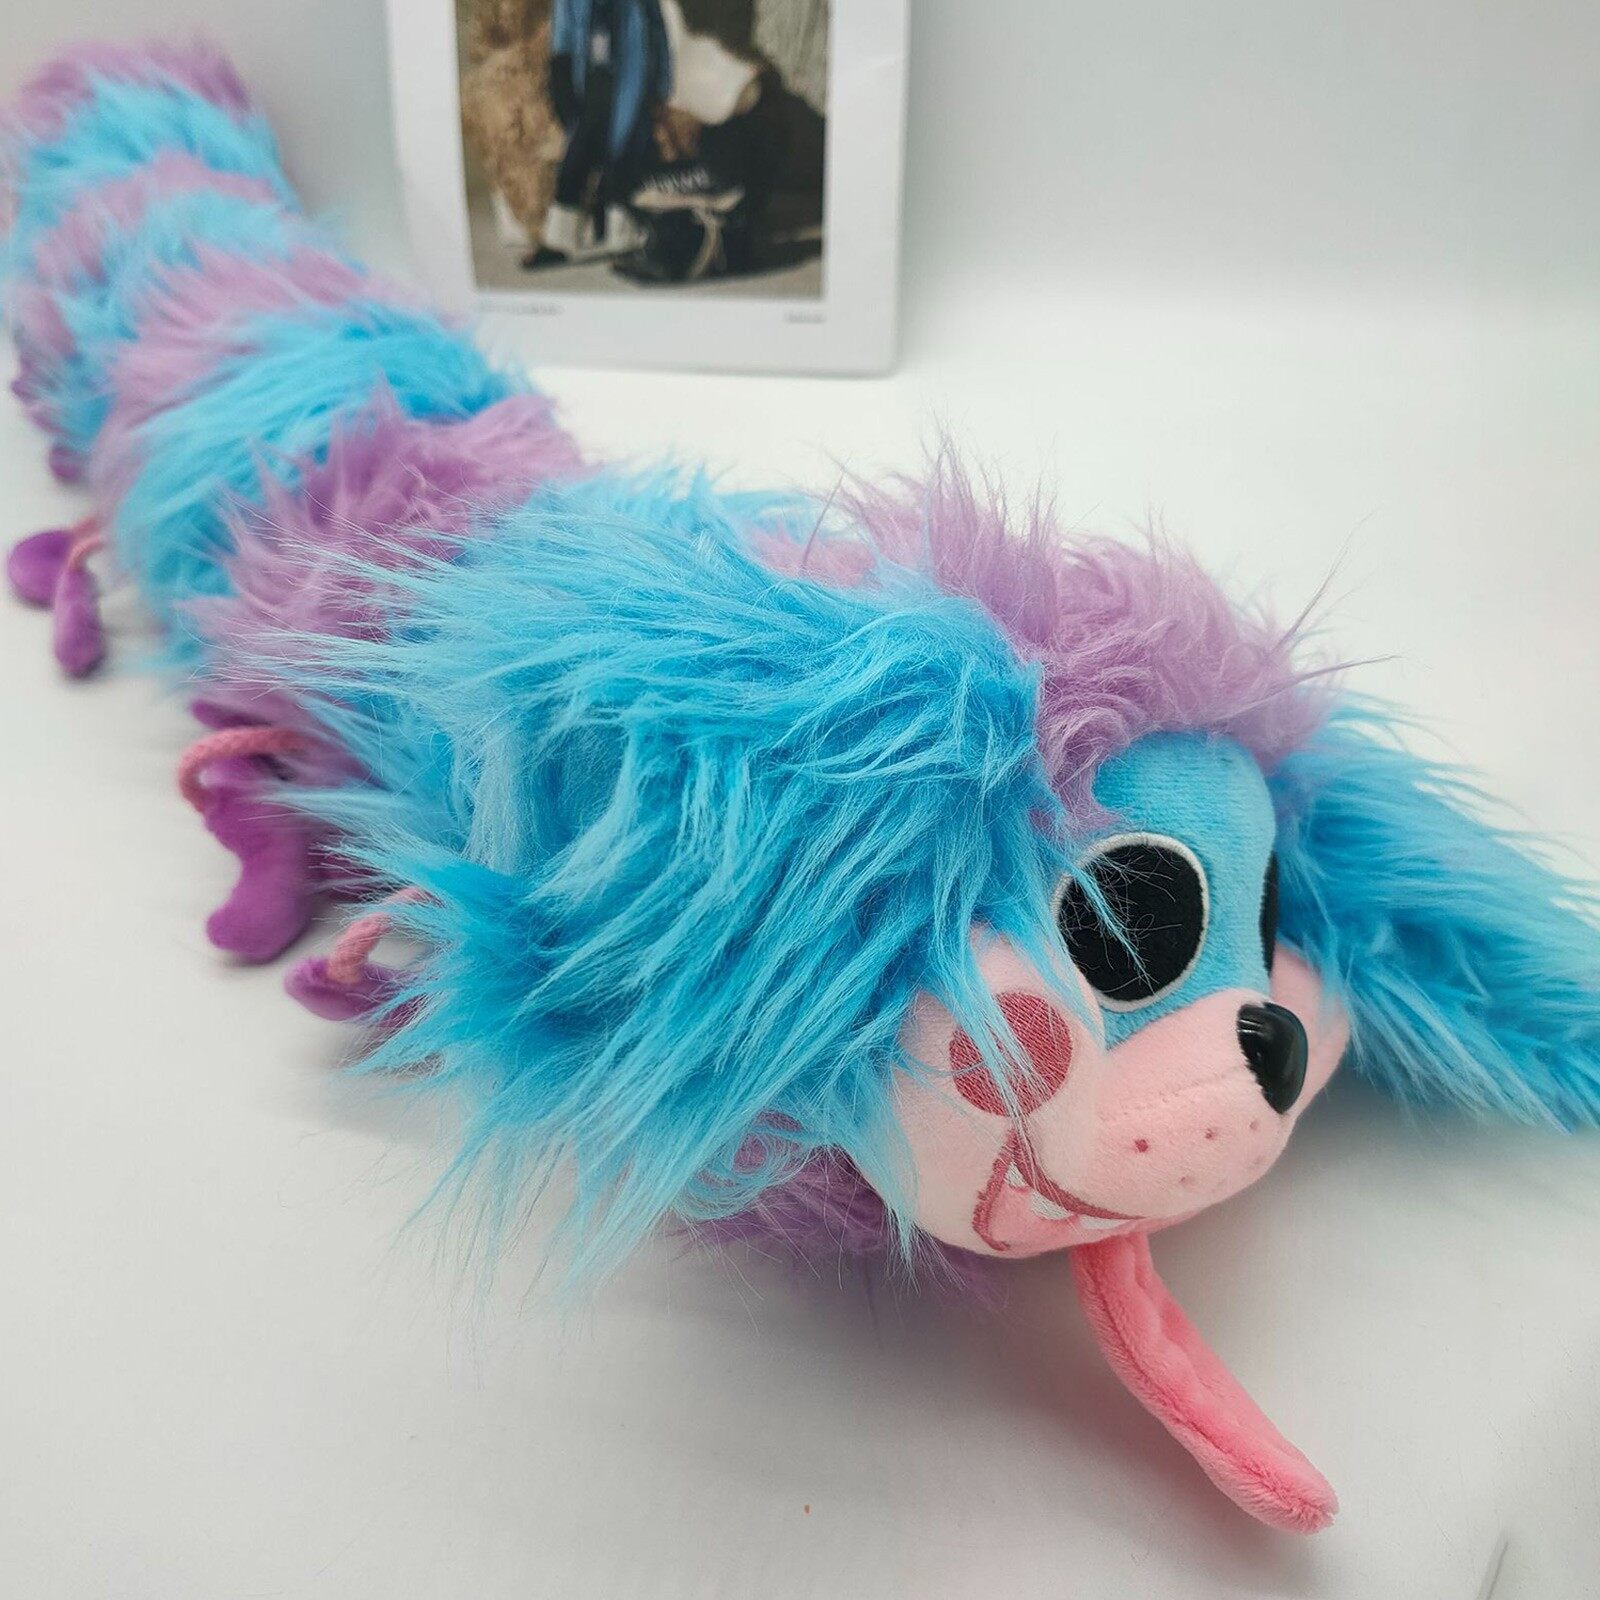 Amyove Pj Pug A Pillar Plush Caterpillar Figure Doll Toy Bunzo Bunny Plush  Stuffed Pillow Buddy Gift For Kids 